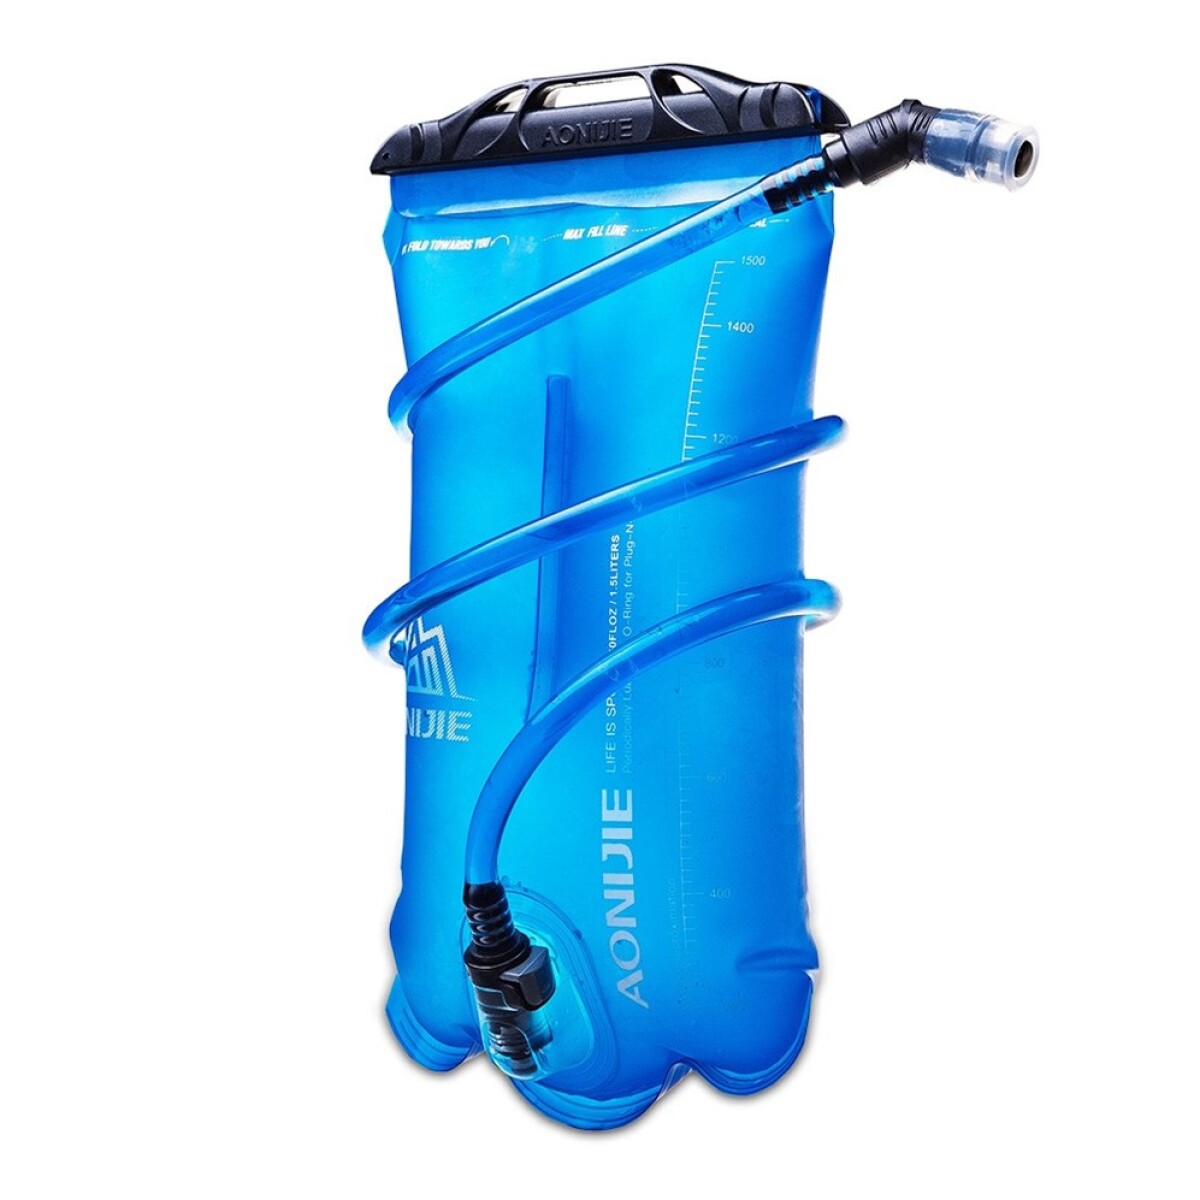 Bolsa De Agua Hidratación Aonijie Water Bag - 2L 